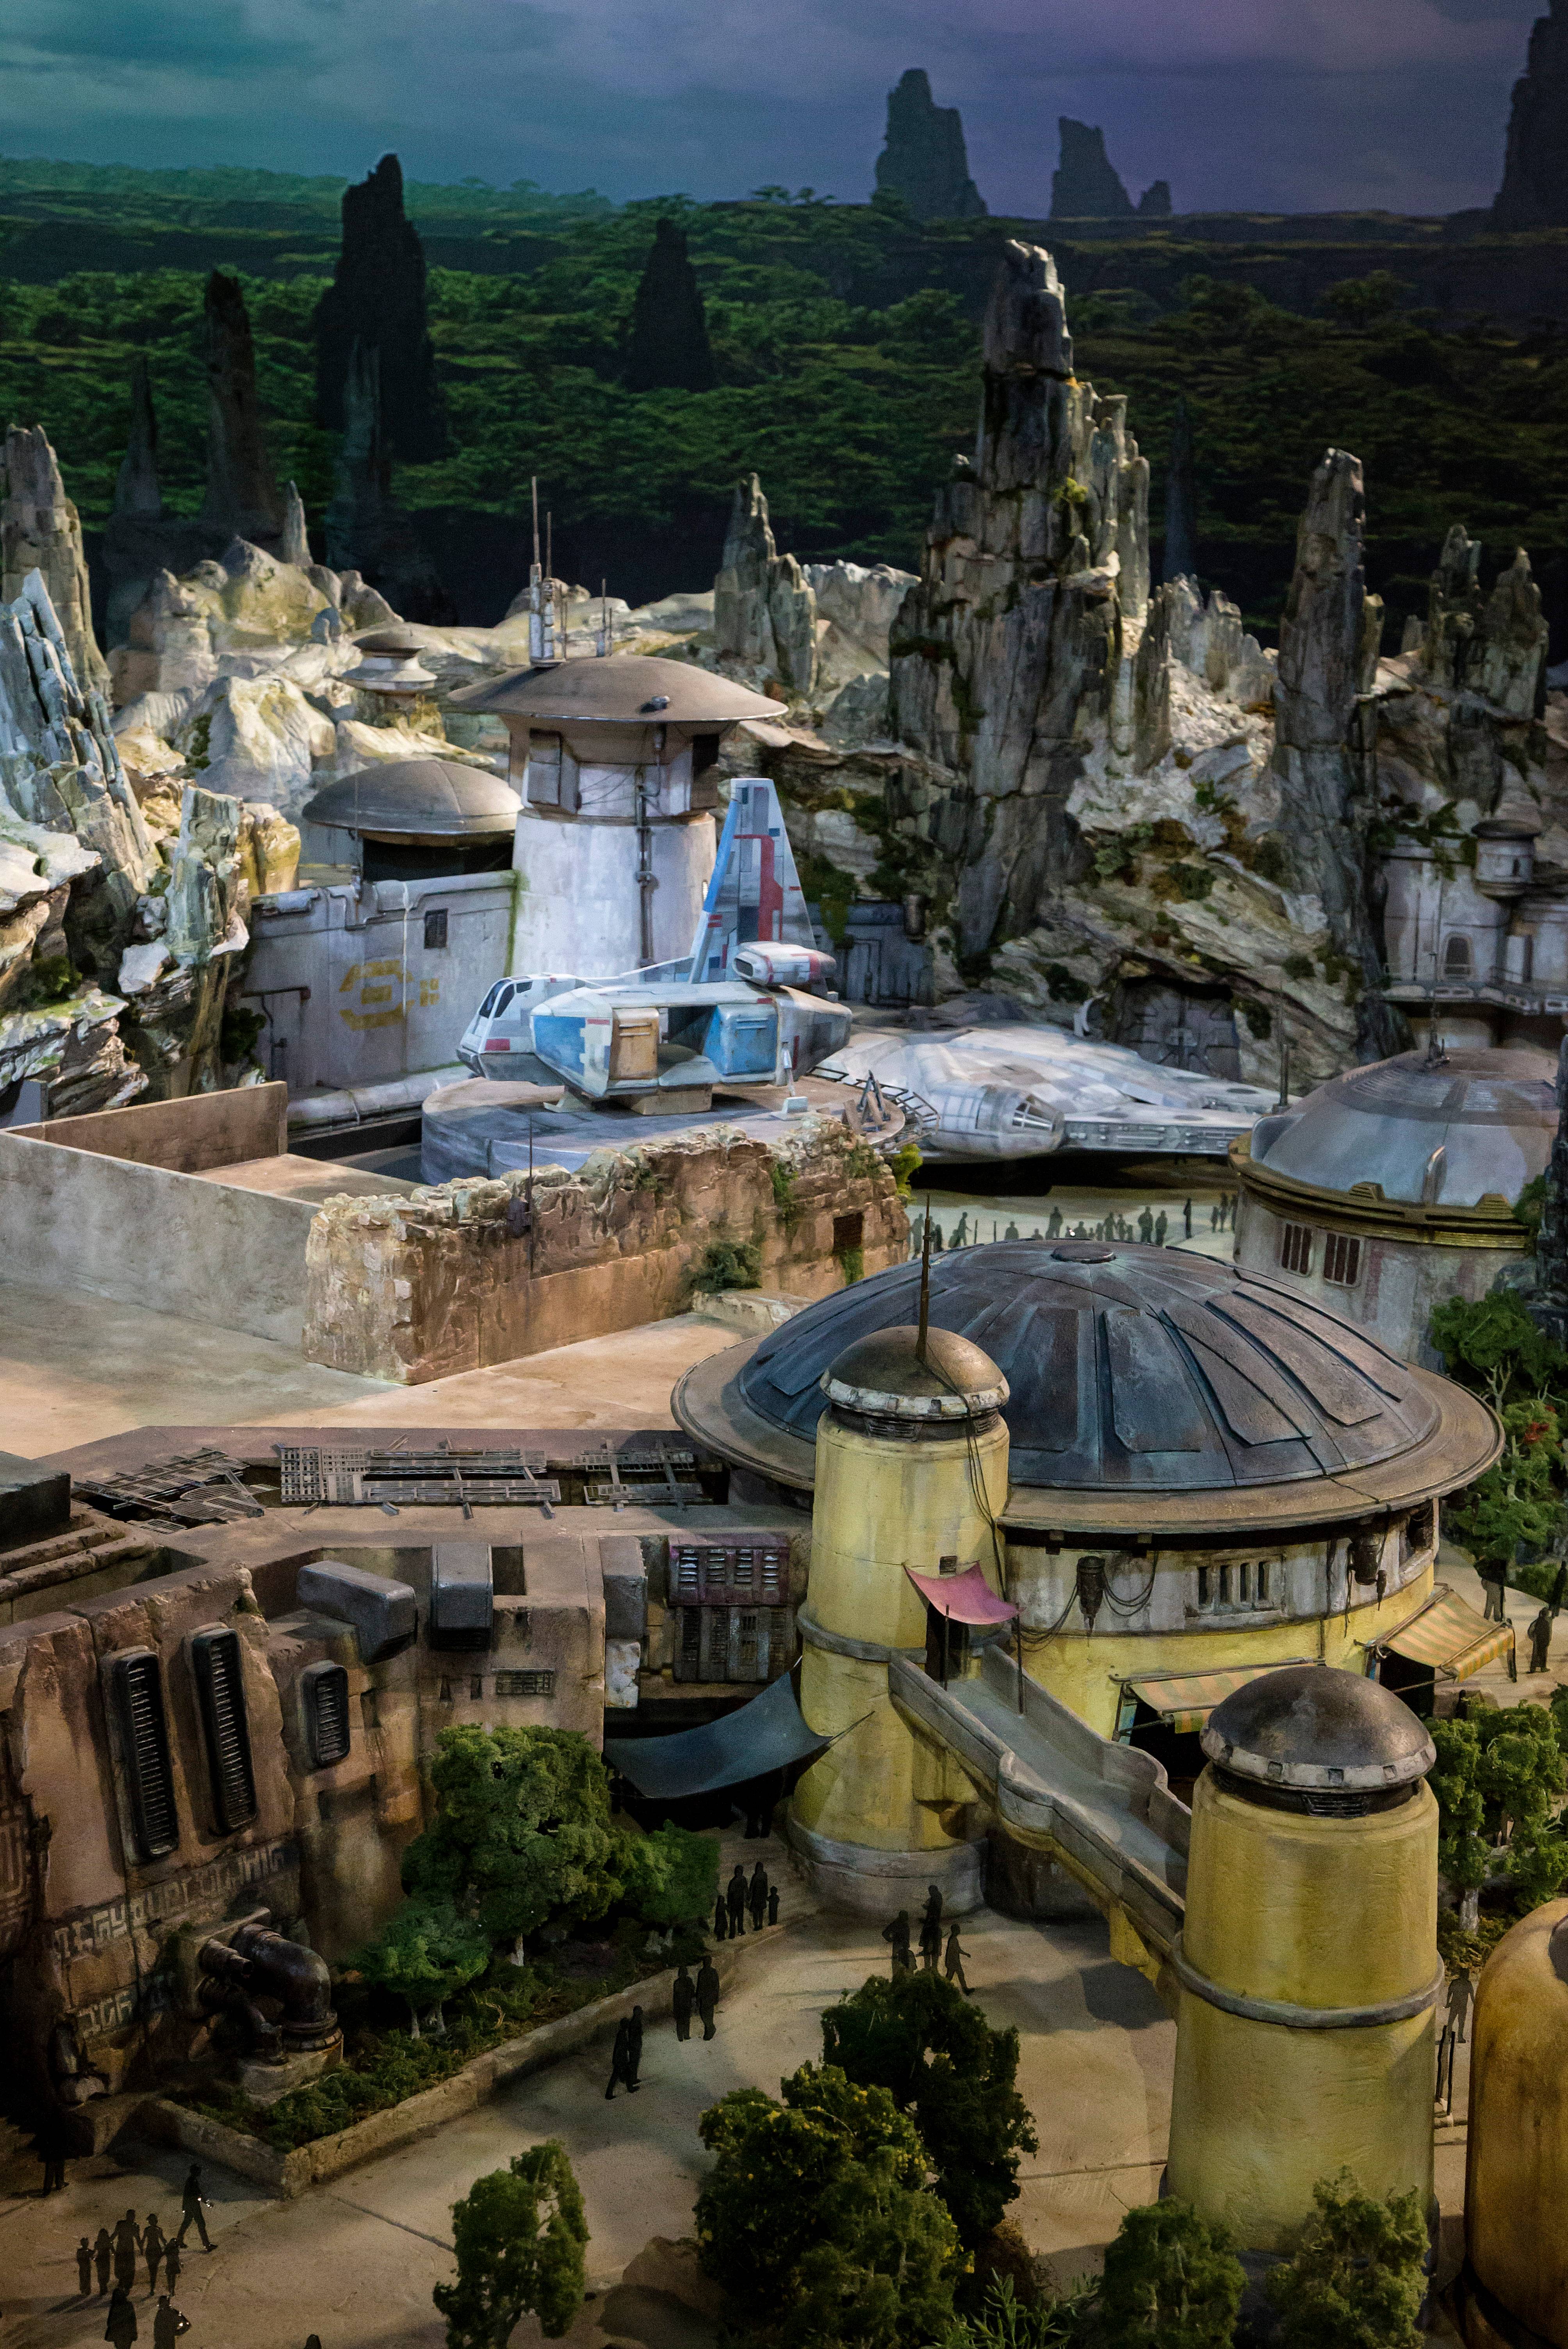 Star Wars Land model in detail